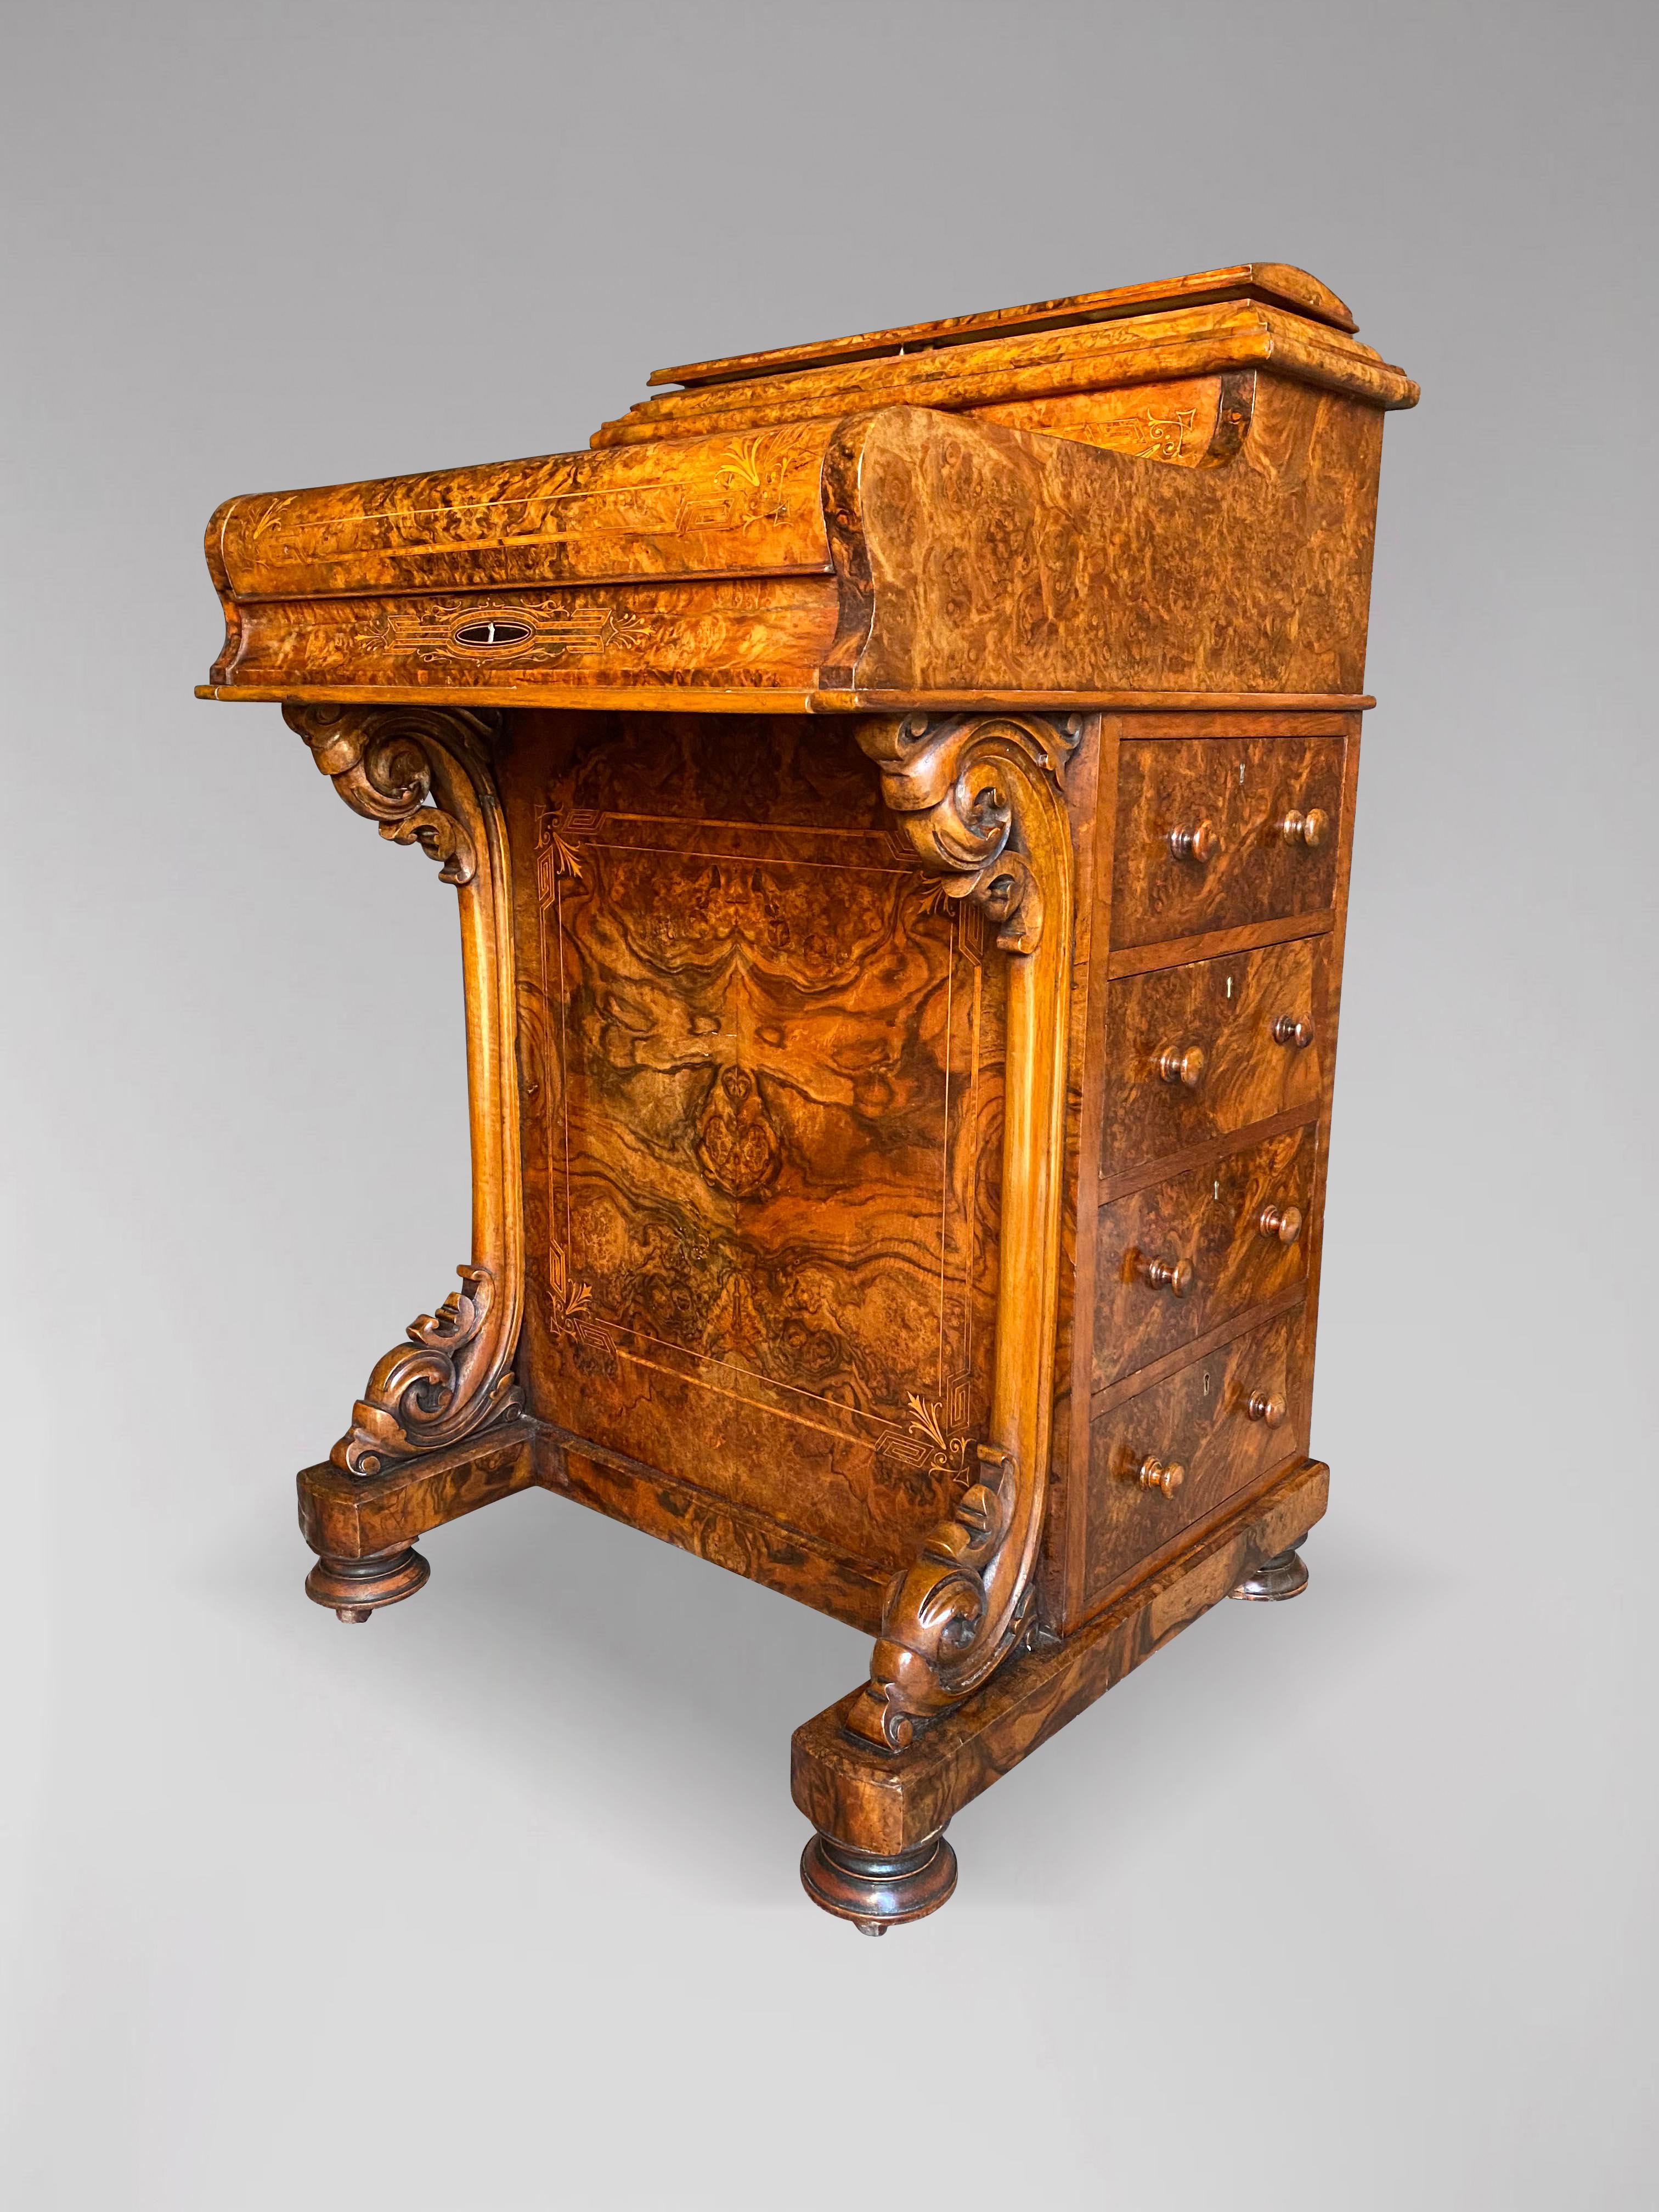 19th Century Victorian Period Burr Walnut Davenport Desk In Fair Condition For Sale In Petworth,West Sussex, GB